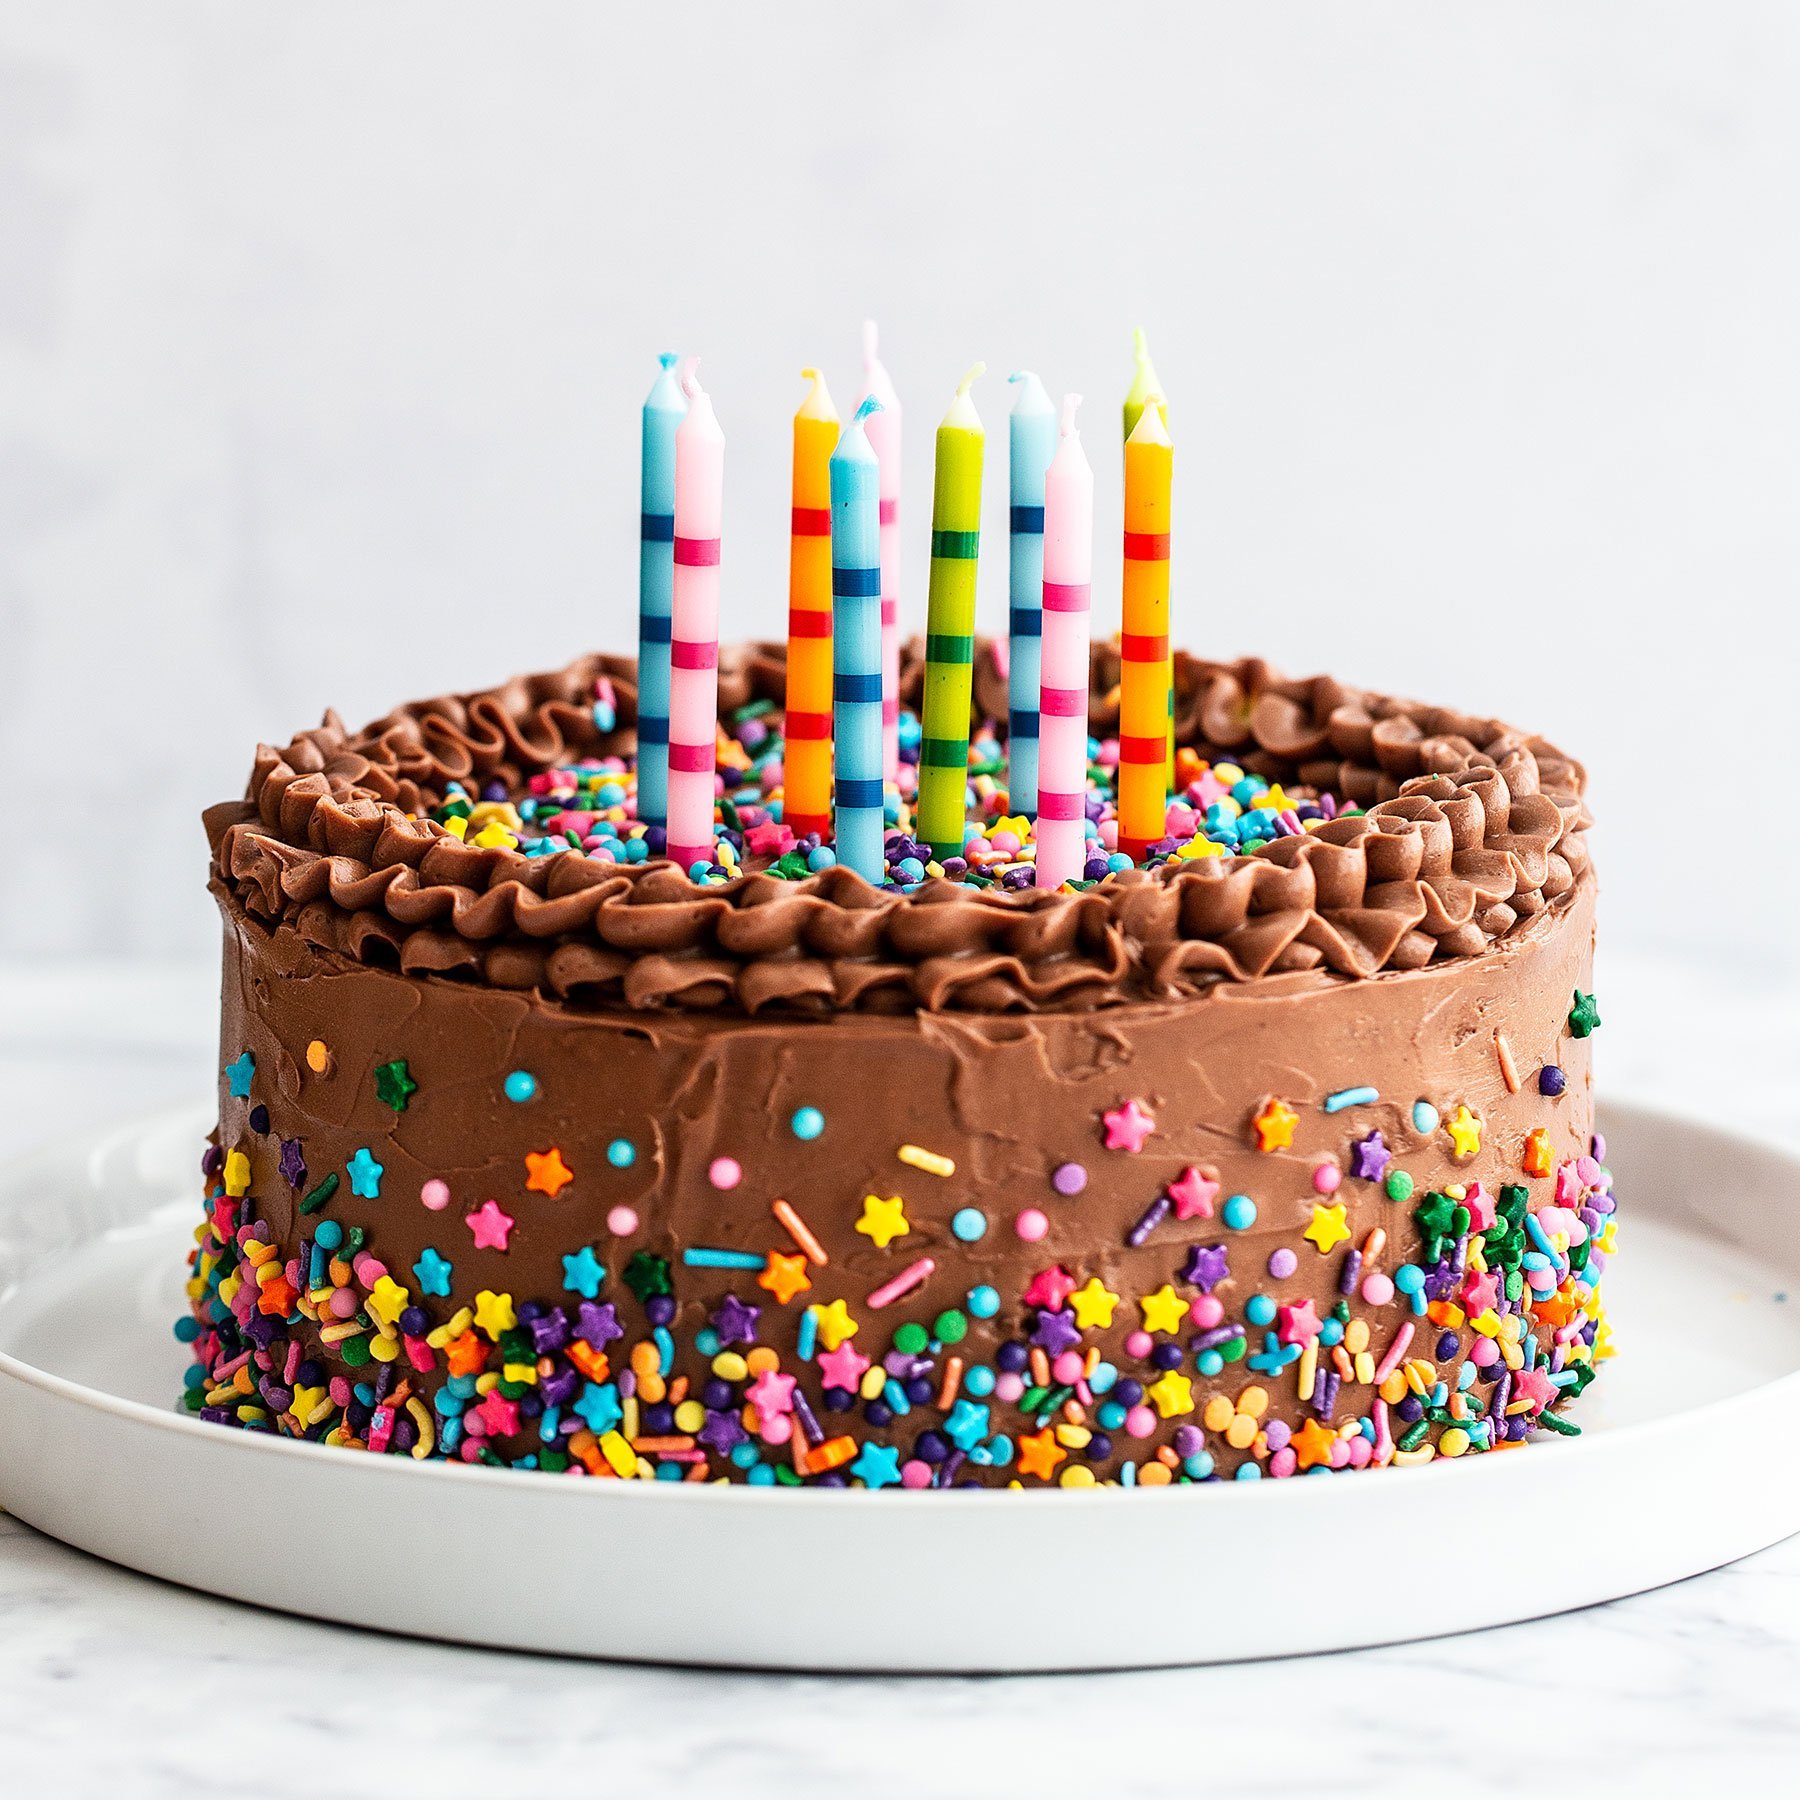 Best Birthday Cake - Handle the Heat